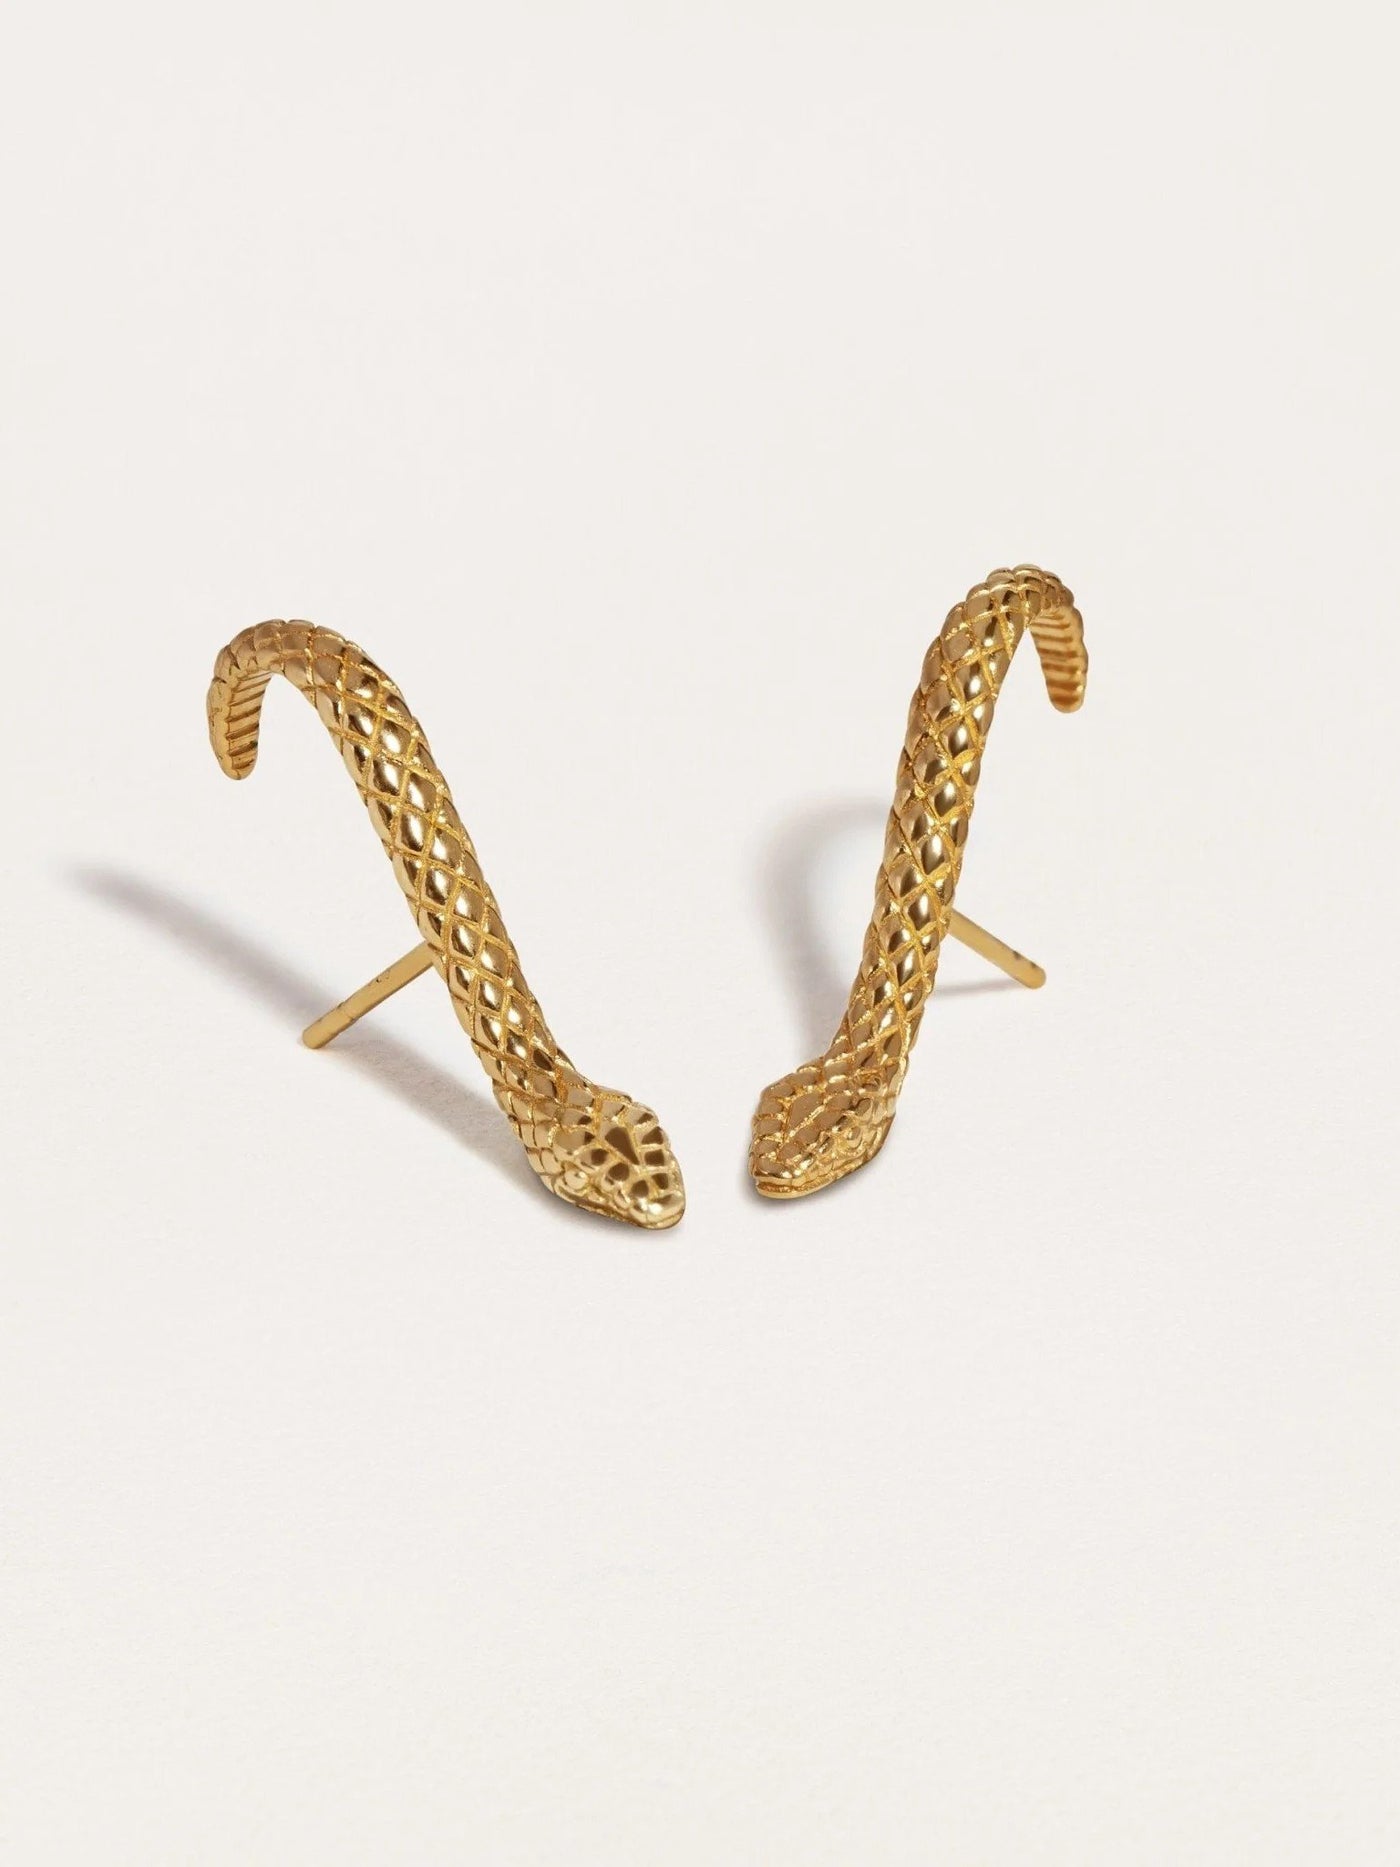 Medusa Snake Suspender Earrings in Sterling Silver - 925 Silver OxidePairAnimal earringsEar ClimberLunai Jewelry